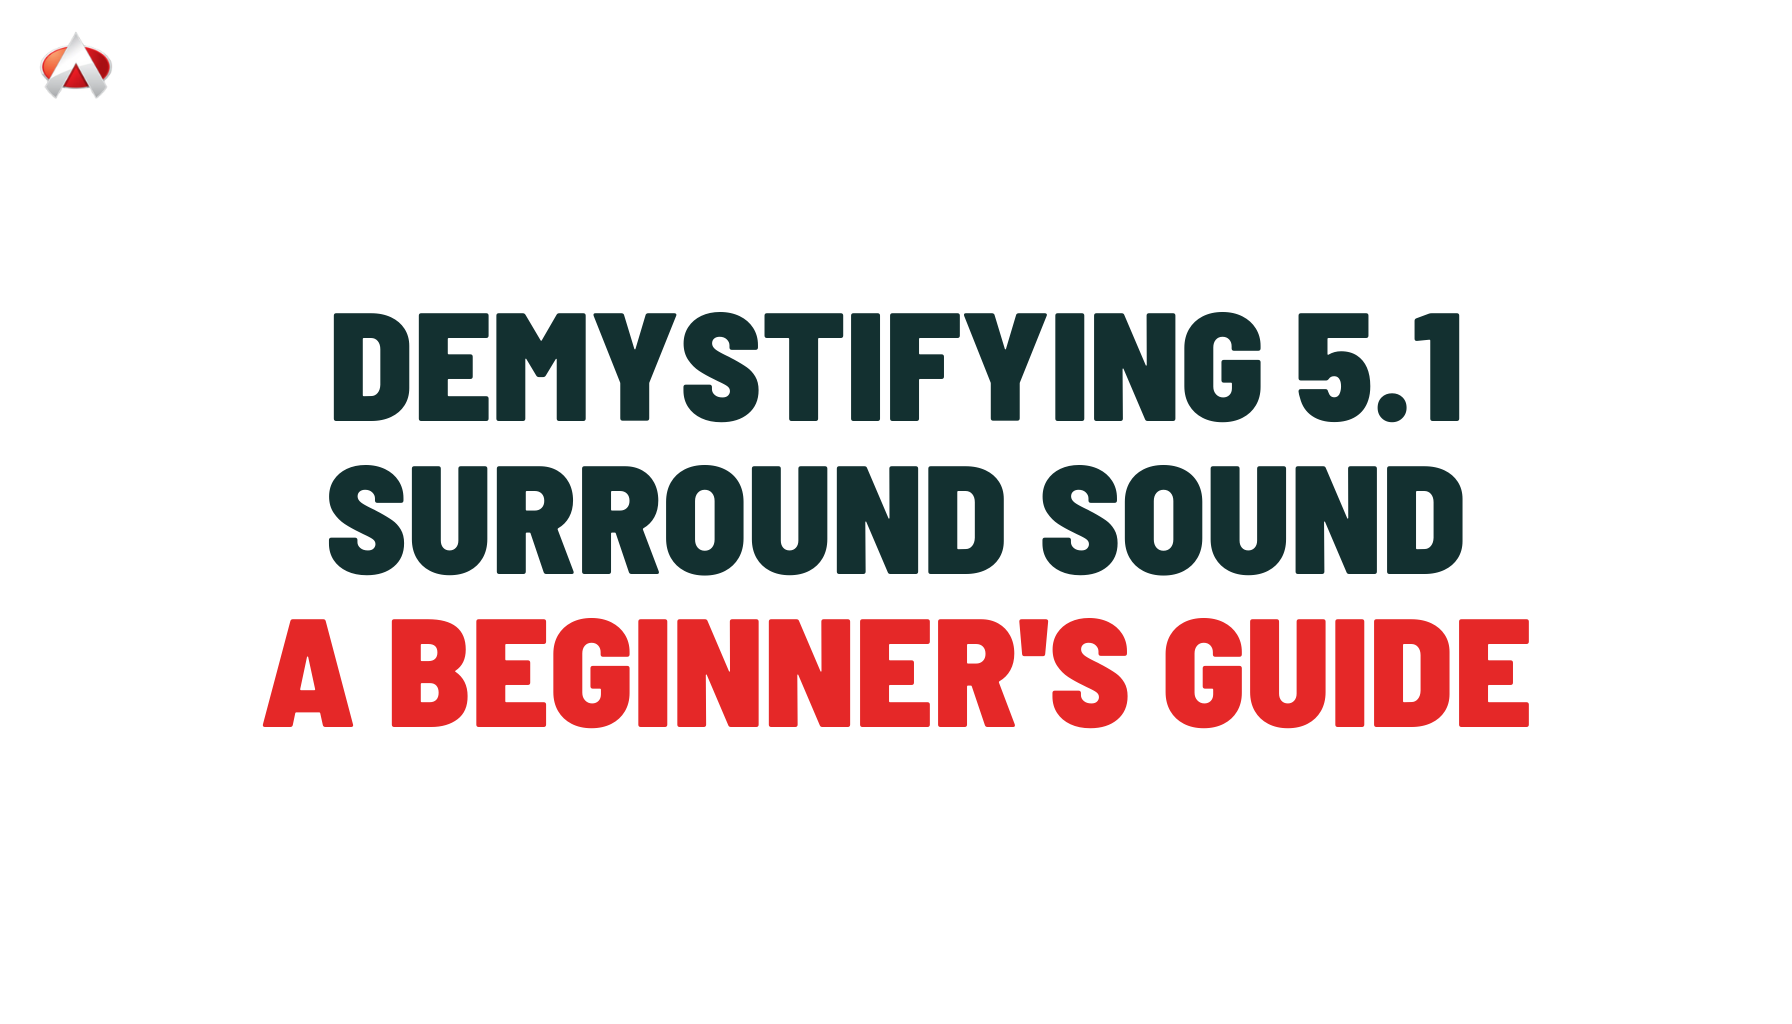 Demystifying 5.1 Surround Sound: A Beginner's Guide